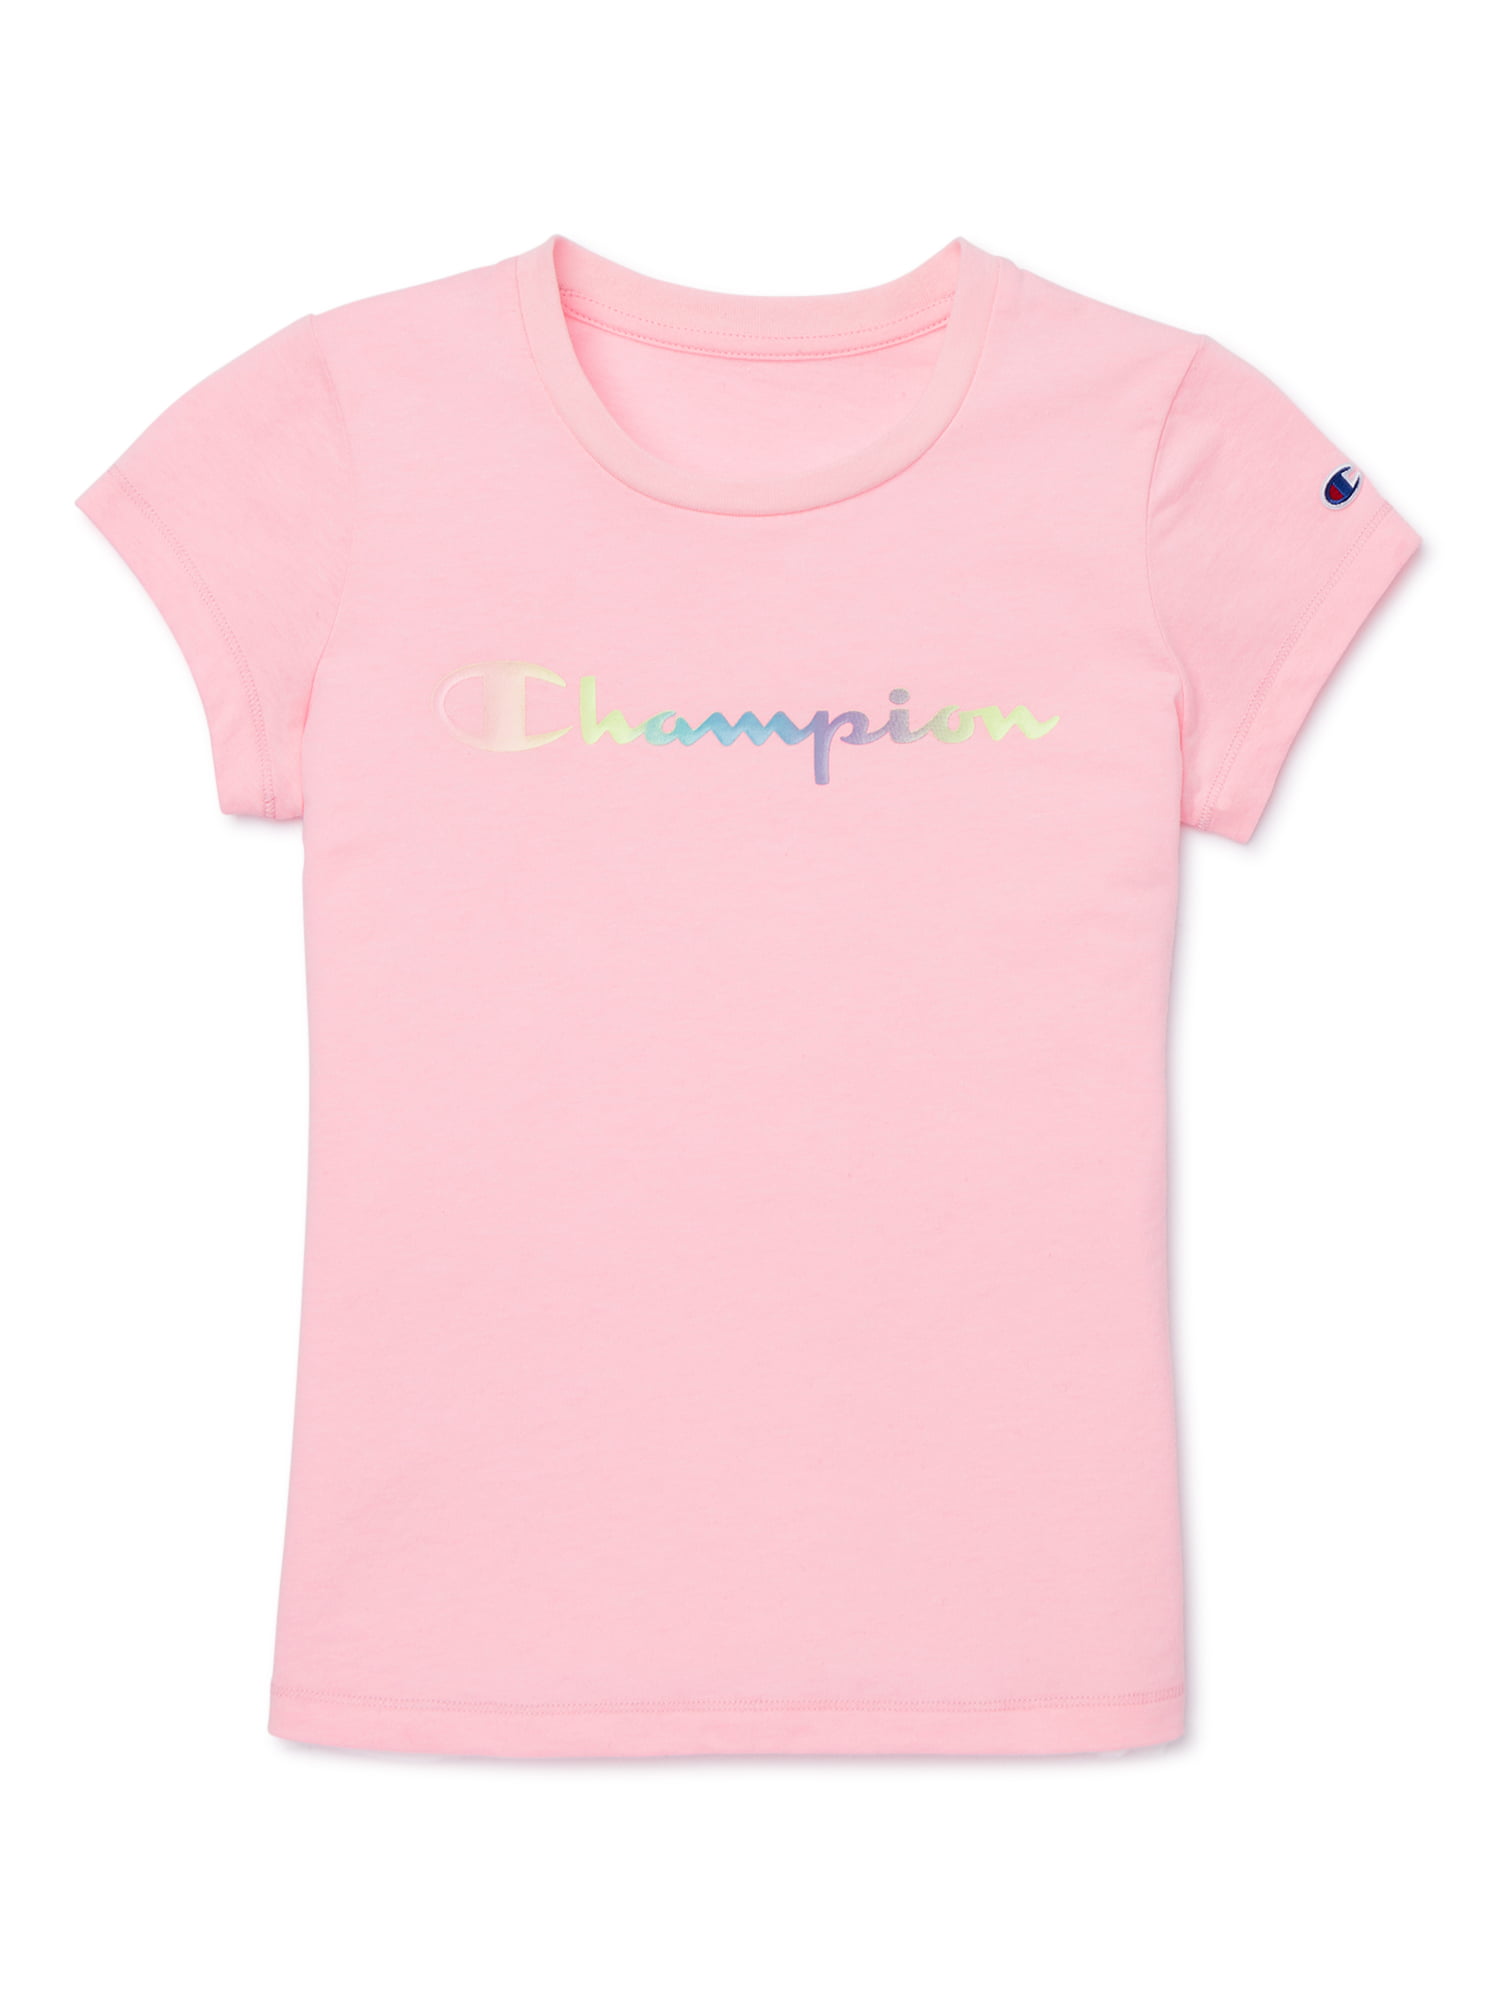 Champion Girls Ombre Logo Active T-shirt, Sizes 7-16 - Walmart.com